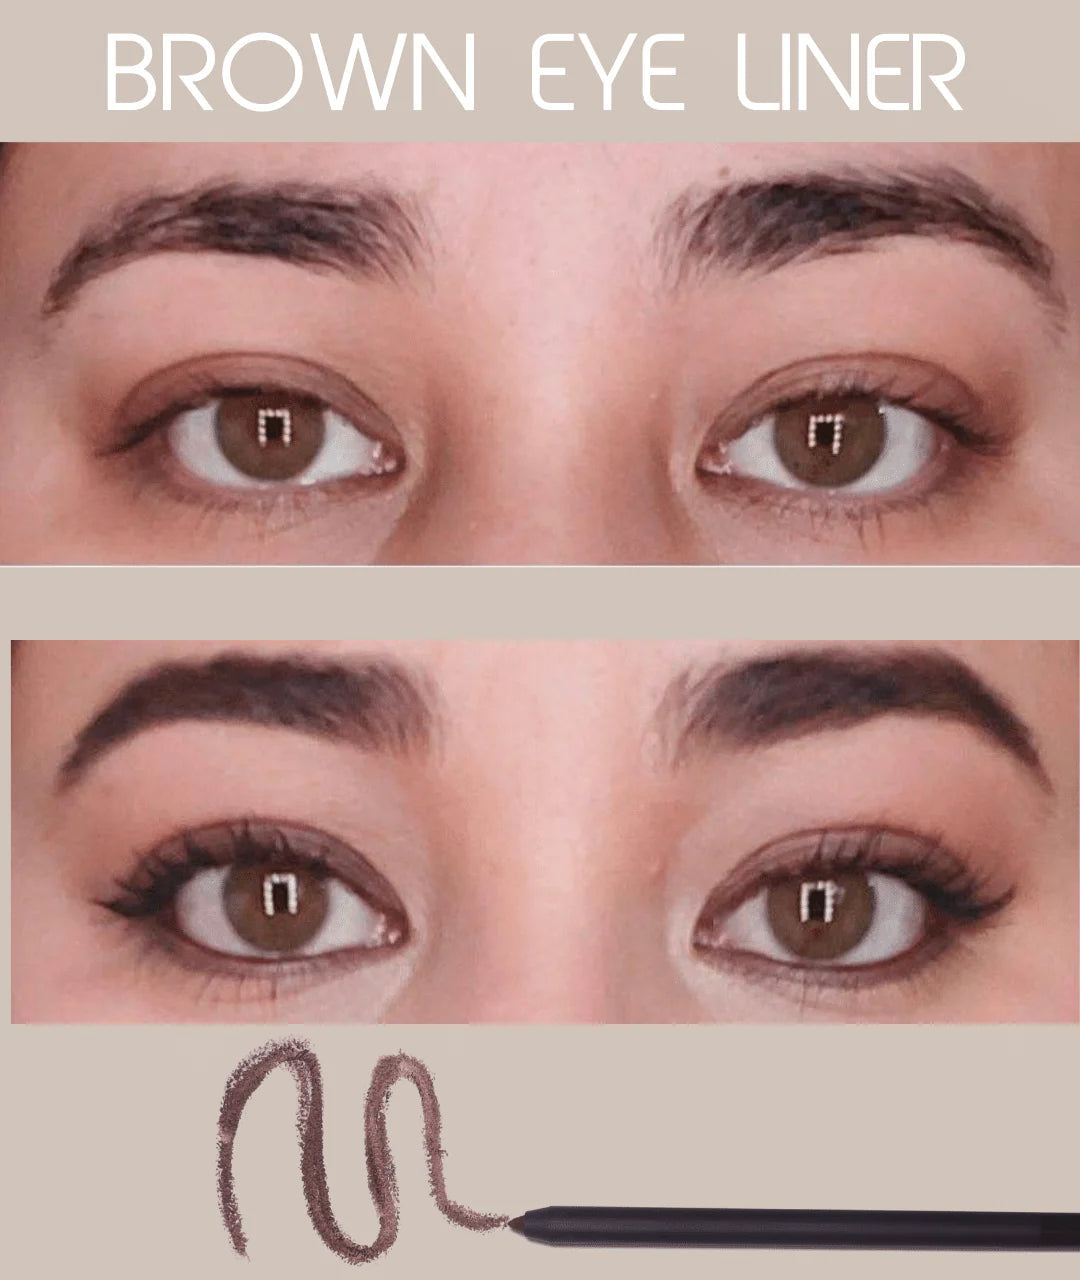 MG Naturals Eye Liner in brown on eyes